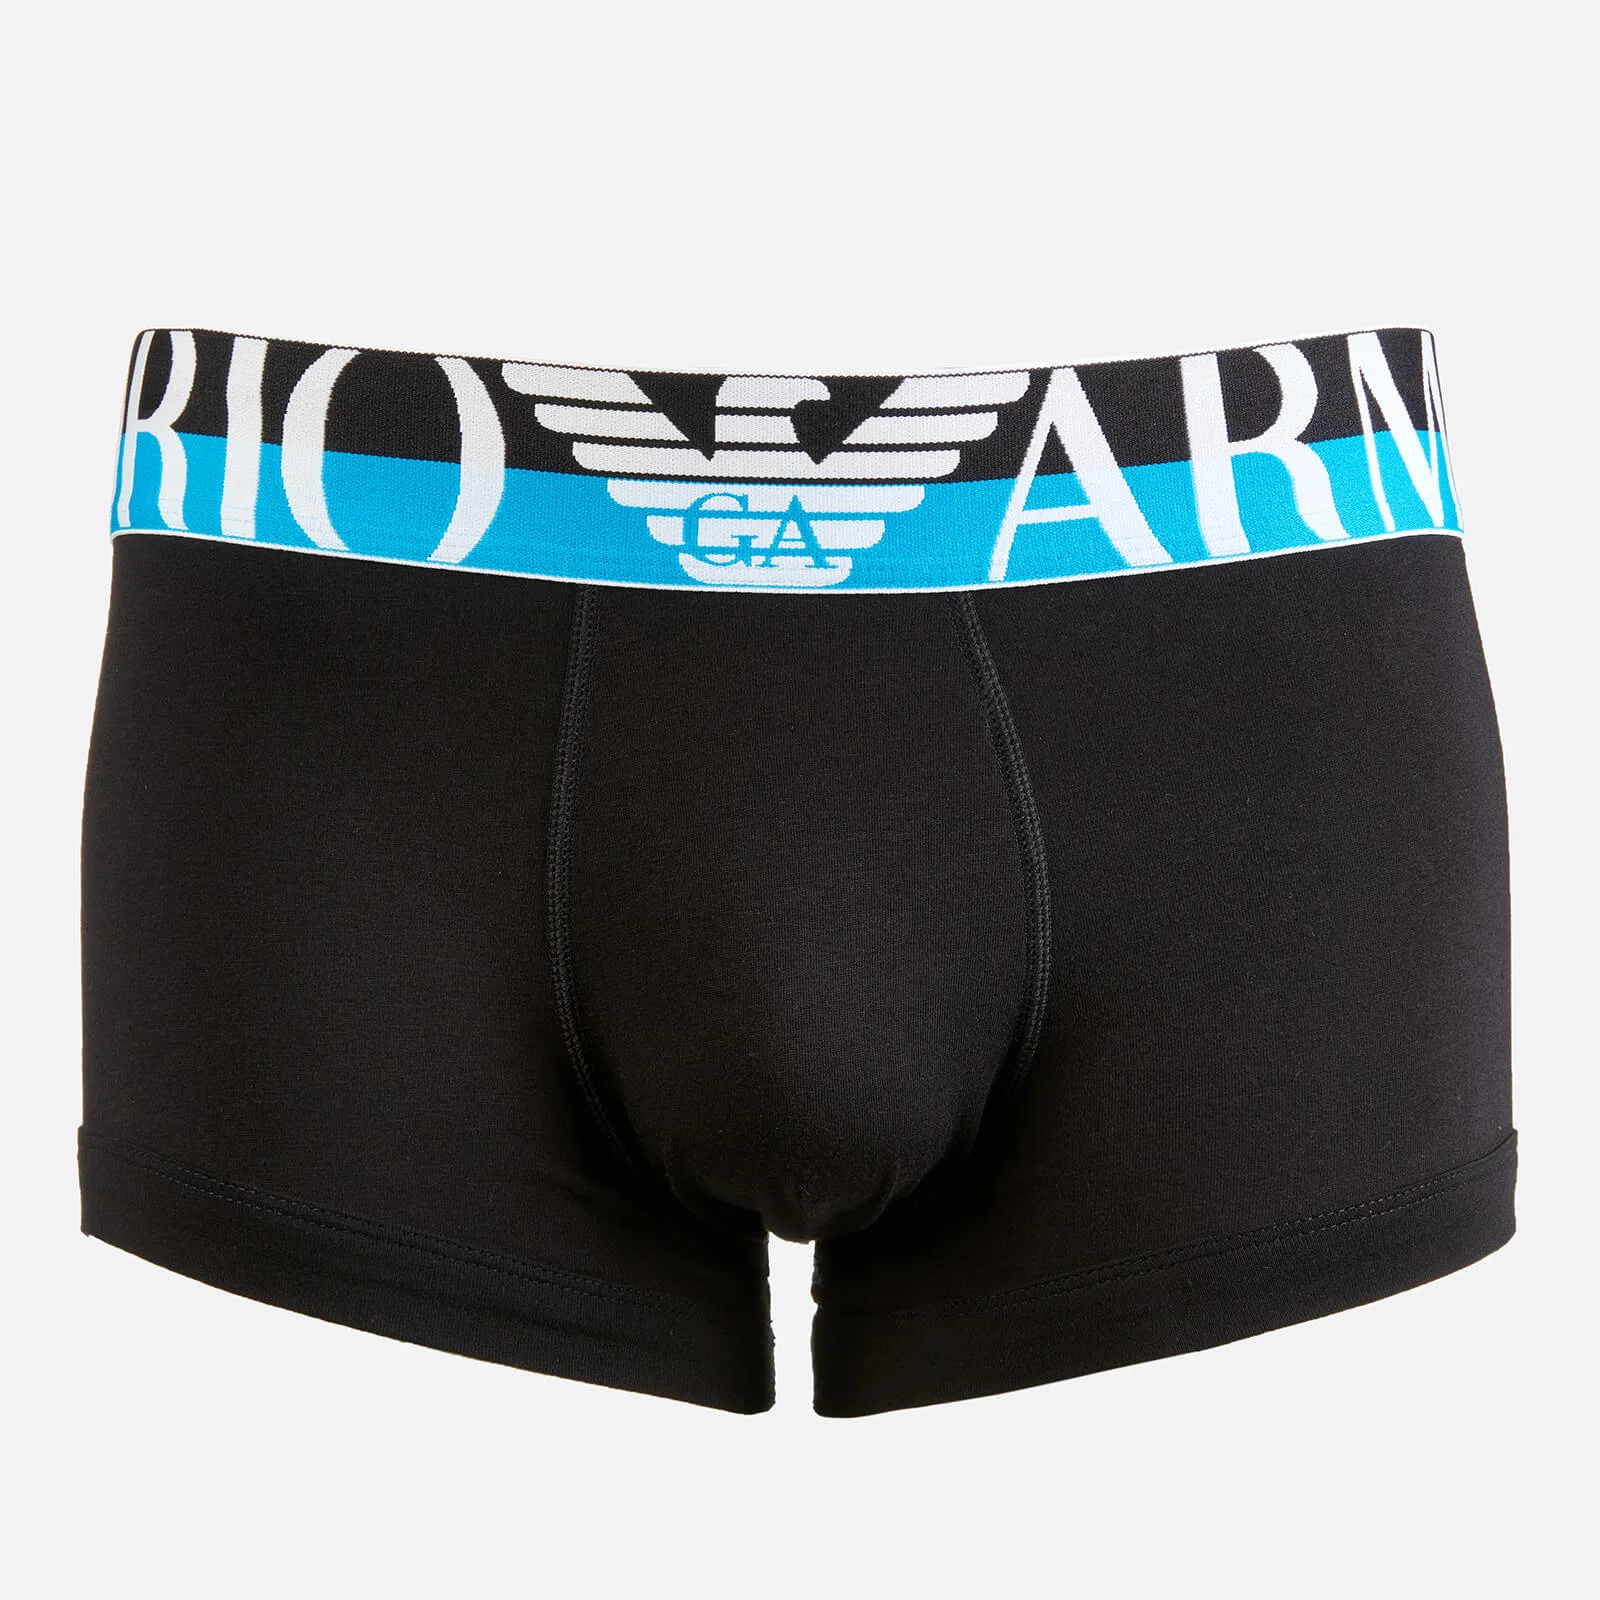 Emporio Armani Men's Megalogo Trunk Boxer Shorts - Black Image 1